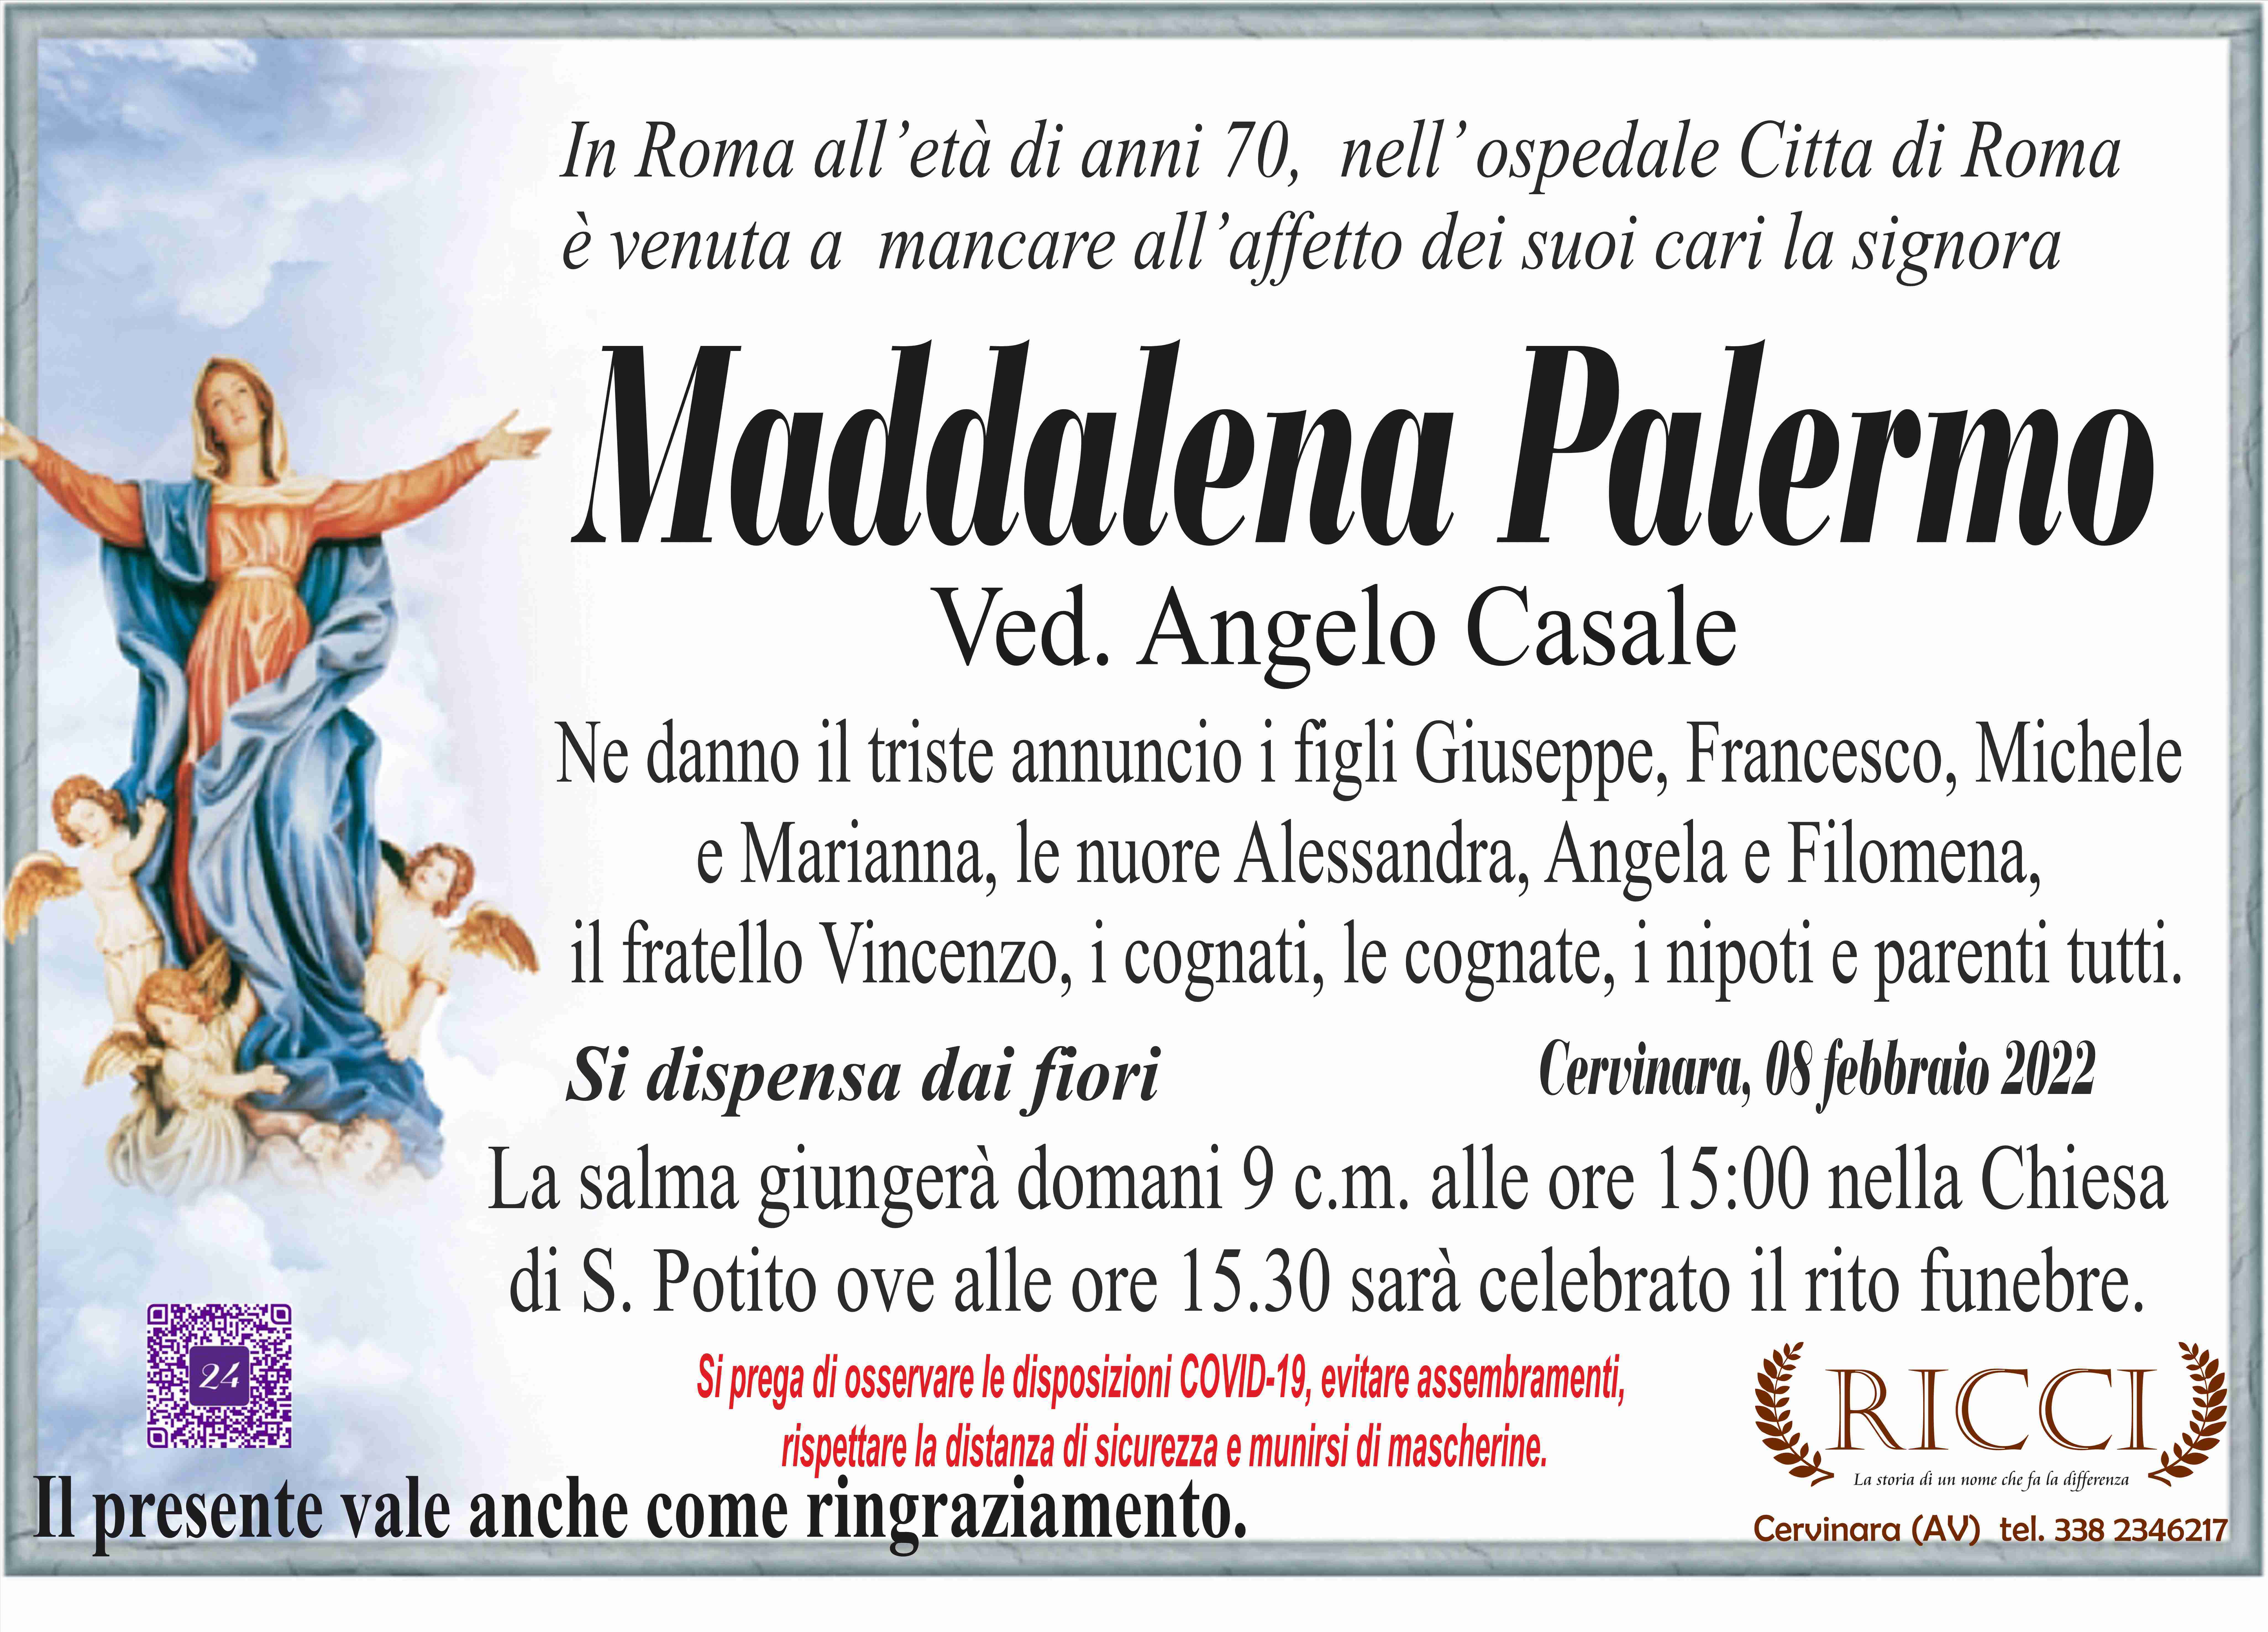 Maddalena Palermo